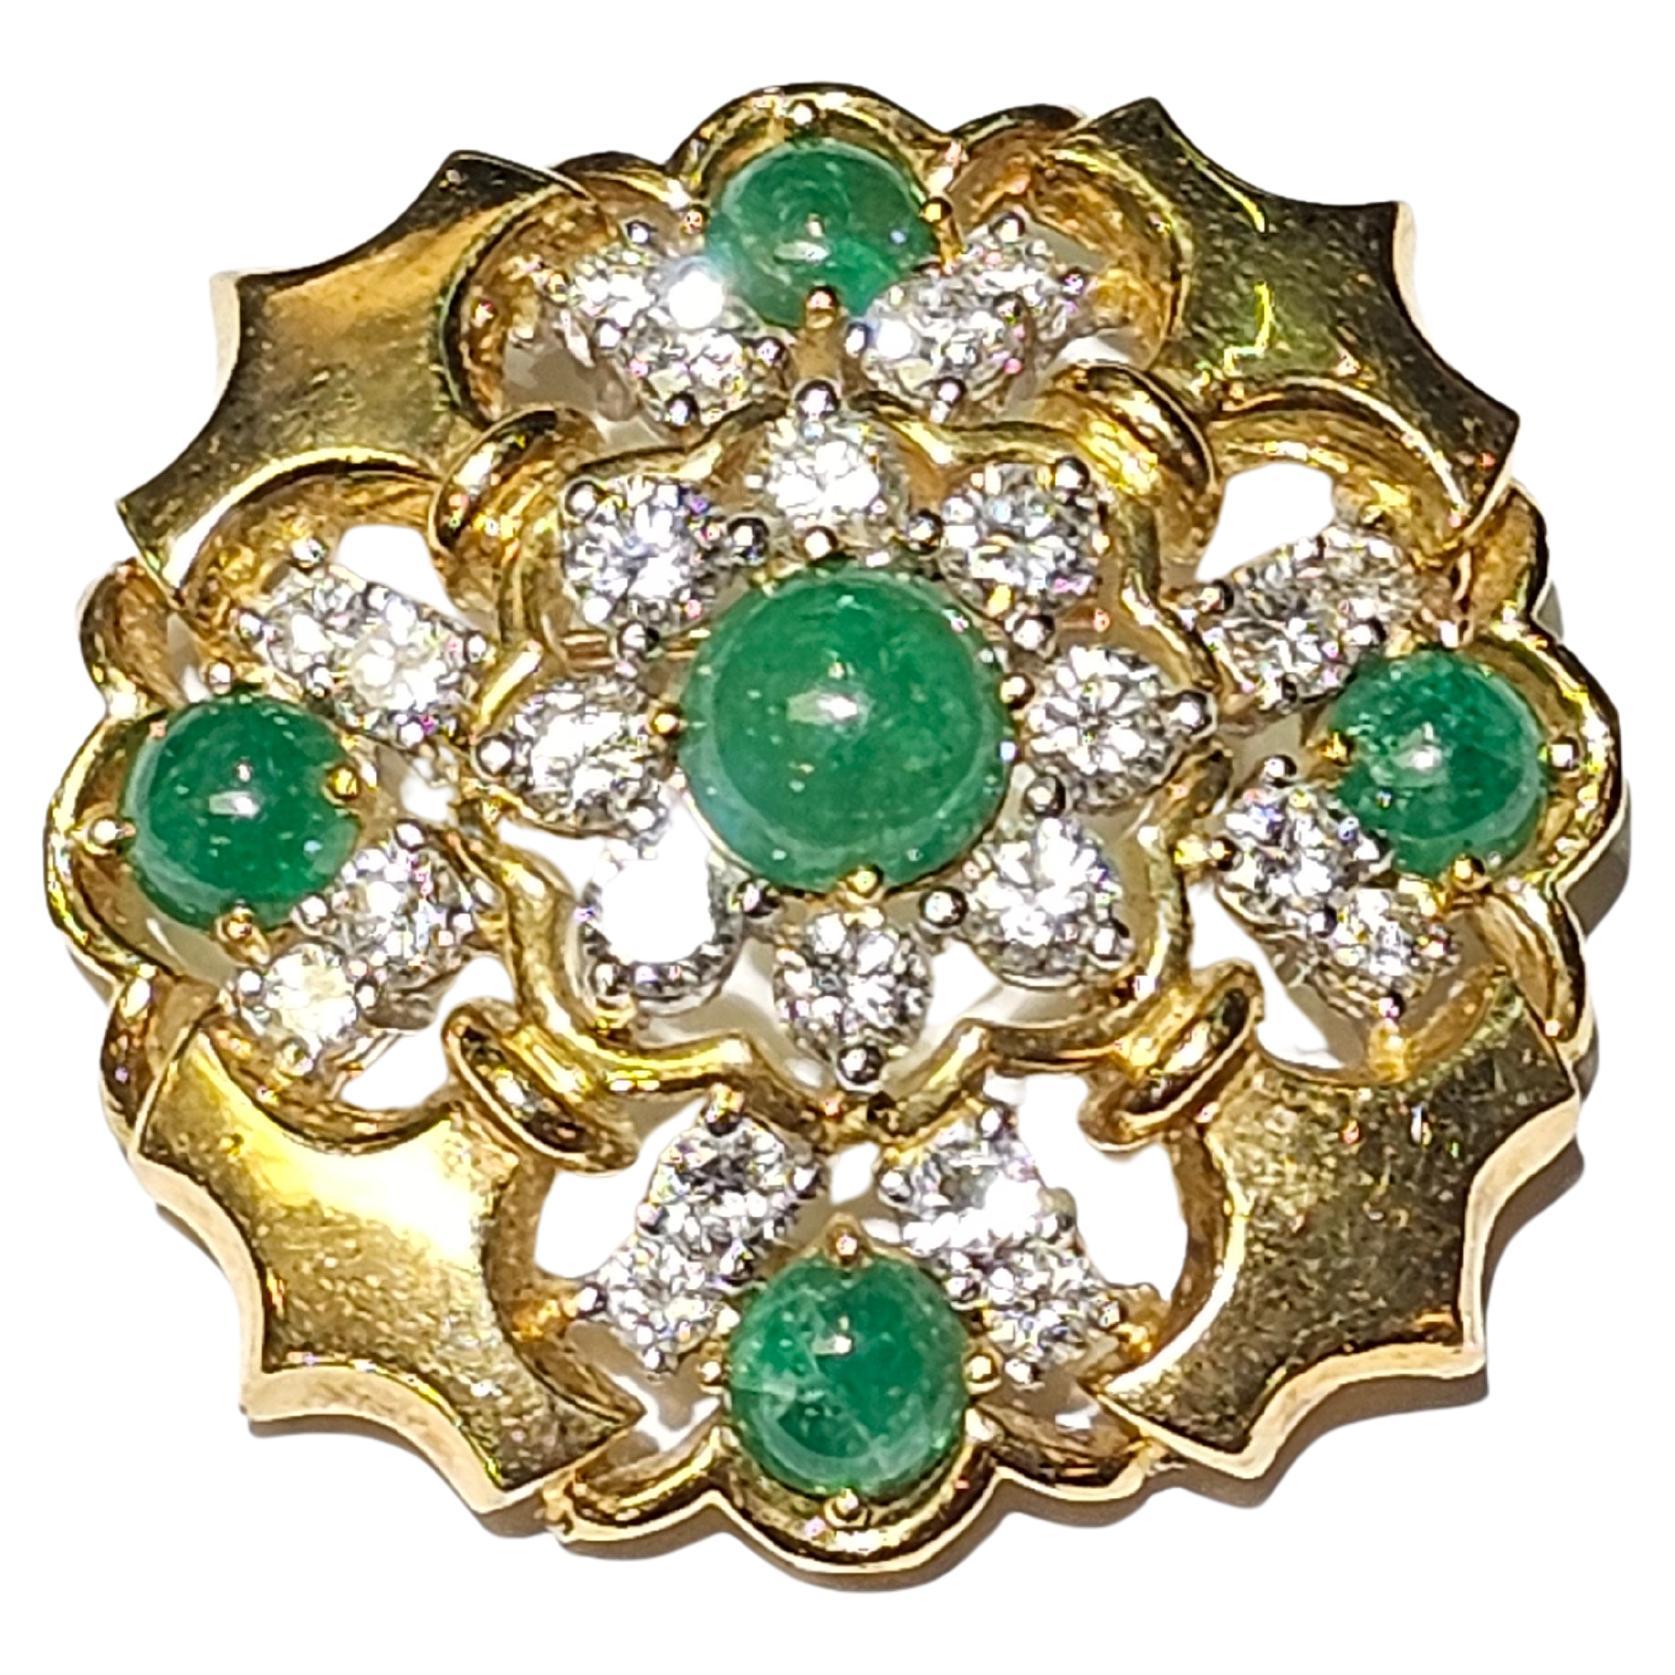 Cabochon Emerald & Diamond Brooch

An 18-karat yellow gold brooch set with 5 cabochon emeralds and 24 round cut diamonds

Stamped 18K

Diameter: 1.5